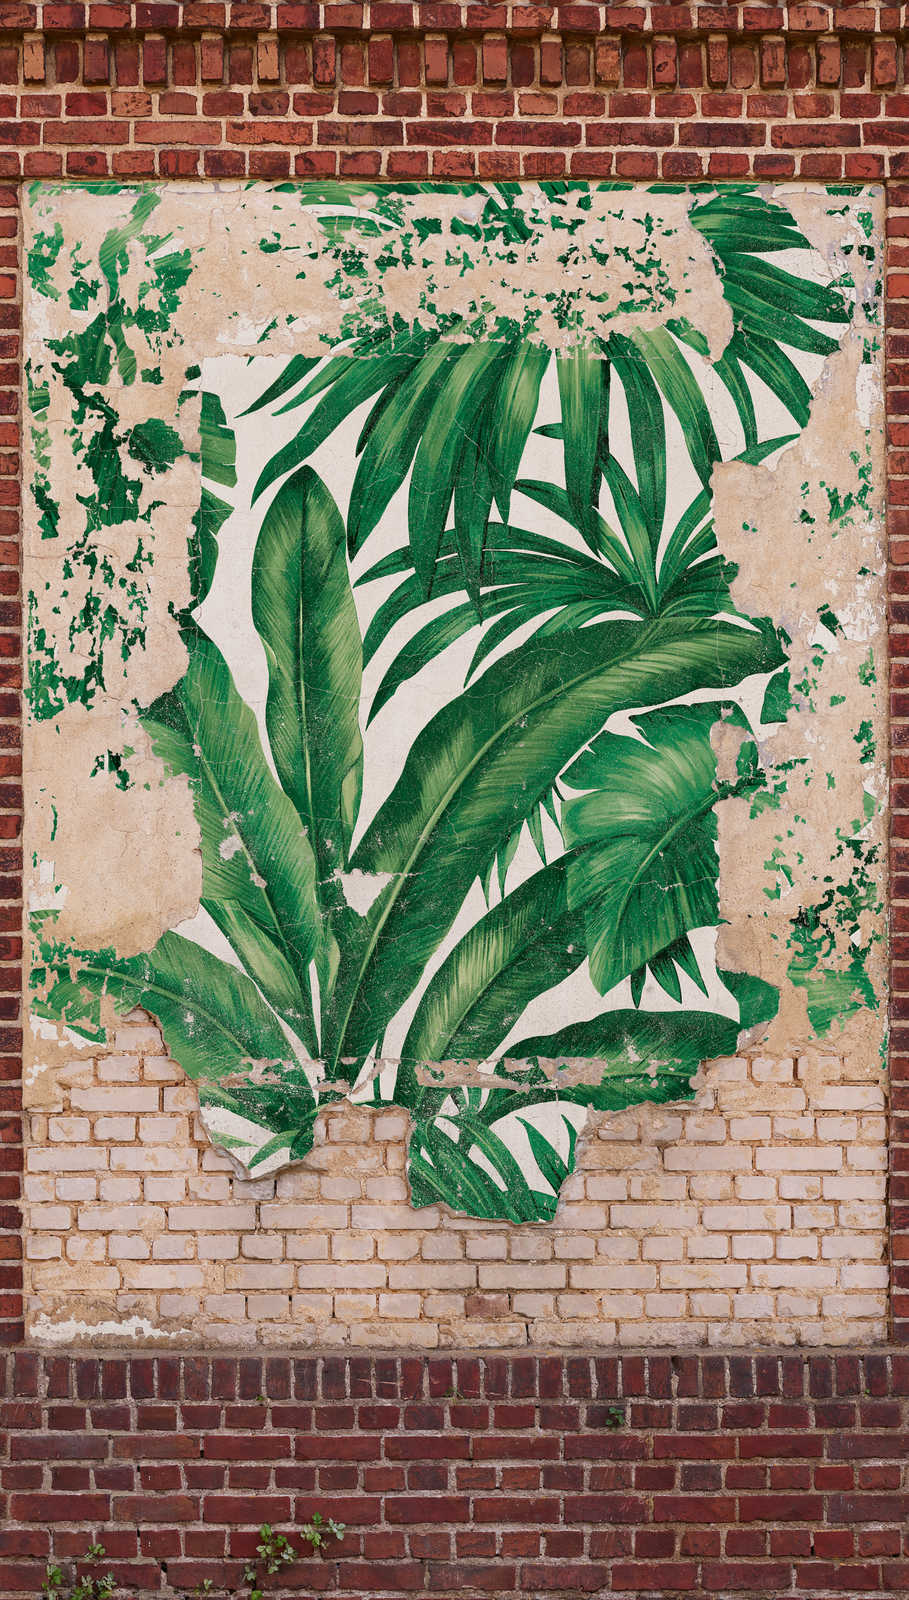             Palm Leaves Wallpaper on Brick Look Wall - Brown, Beige, Red
        